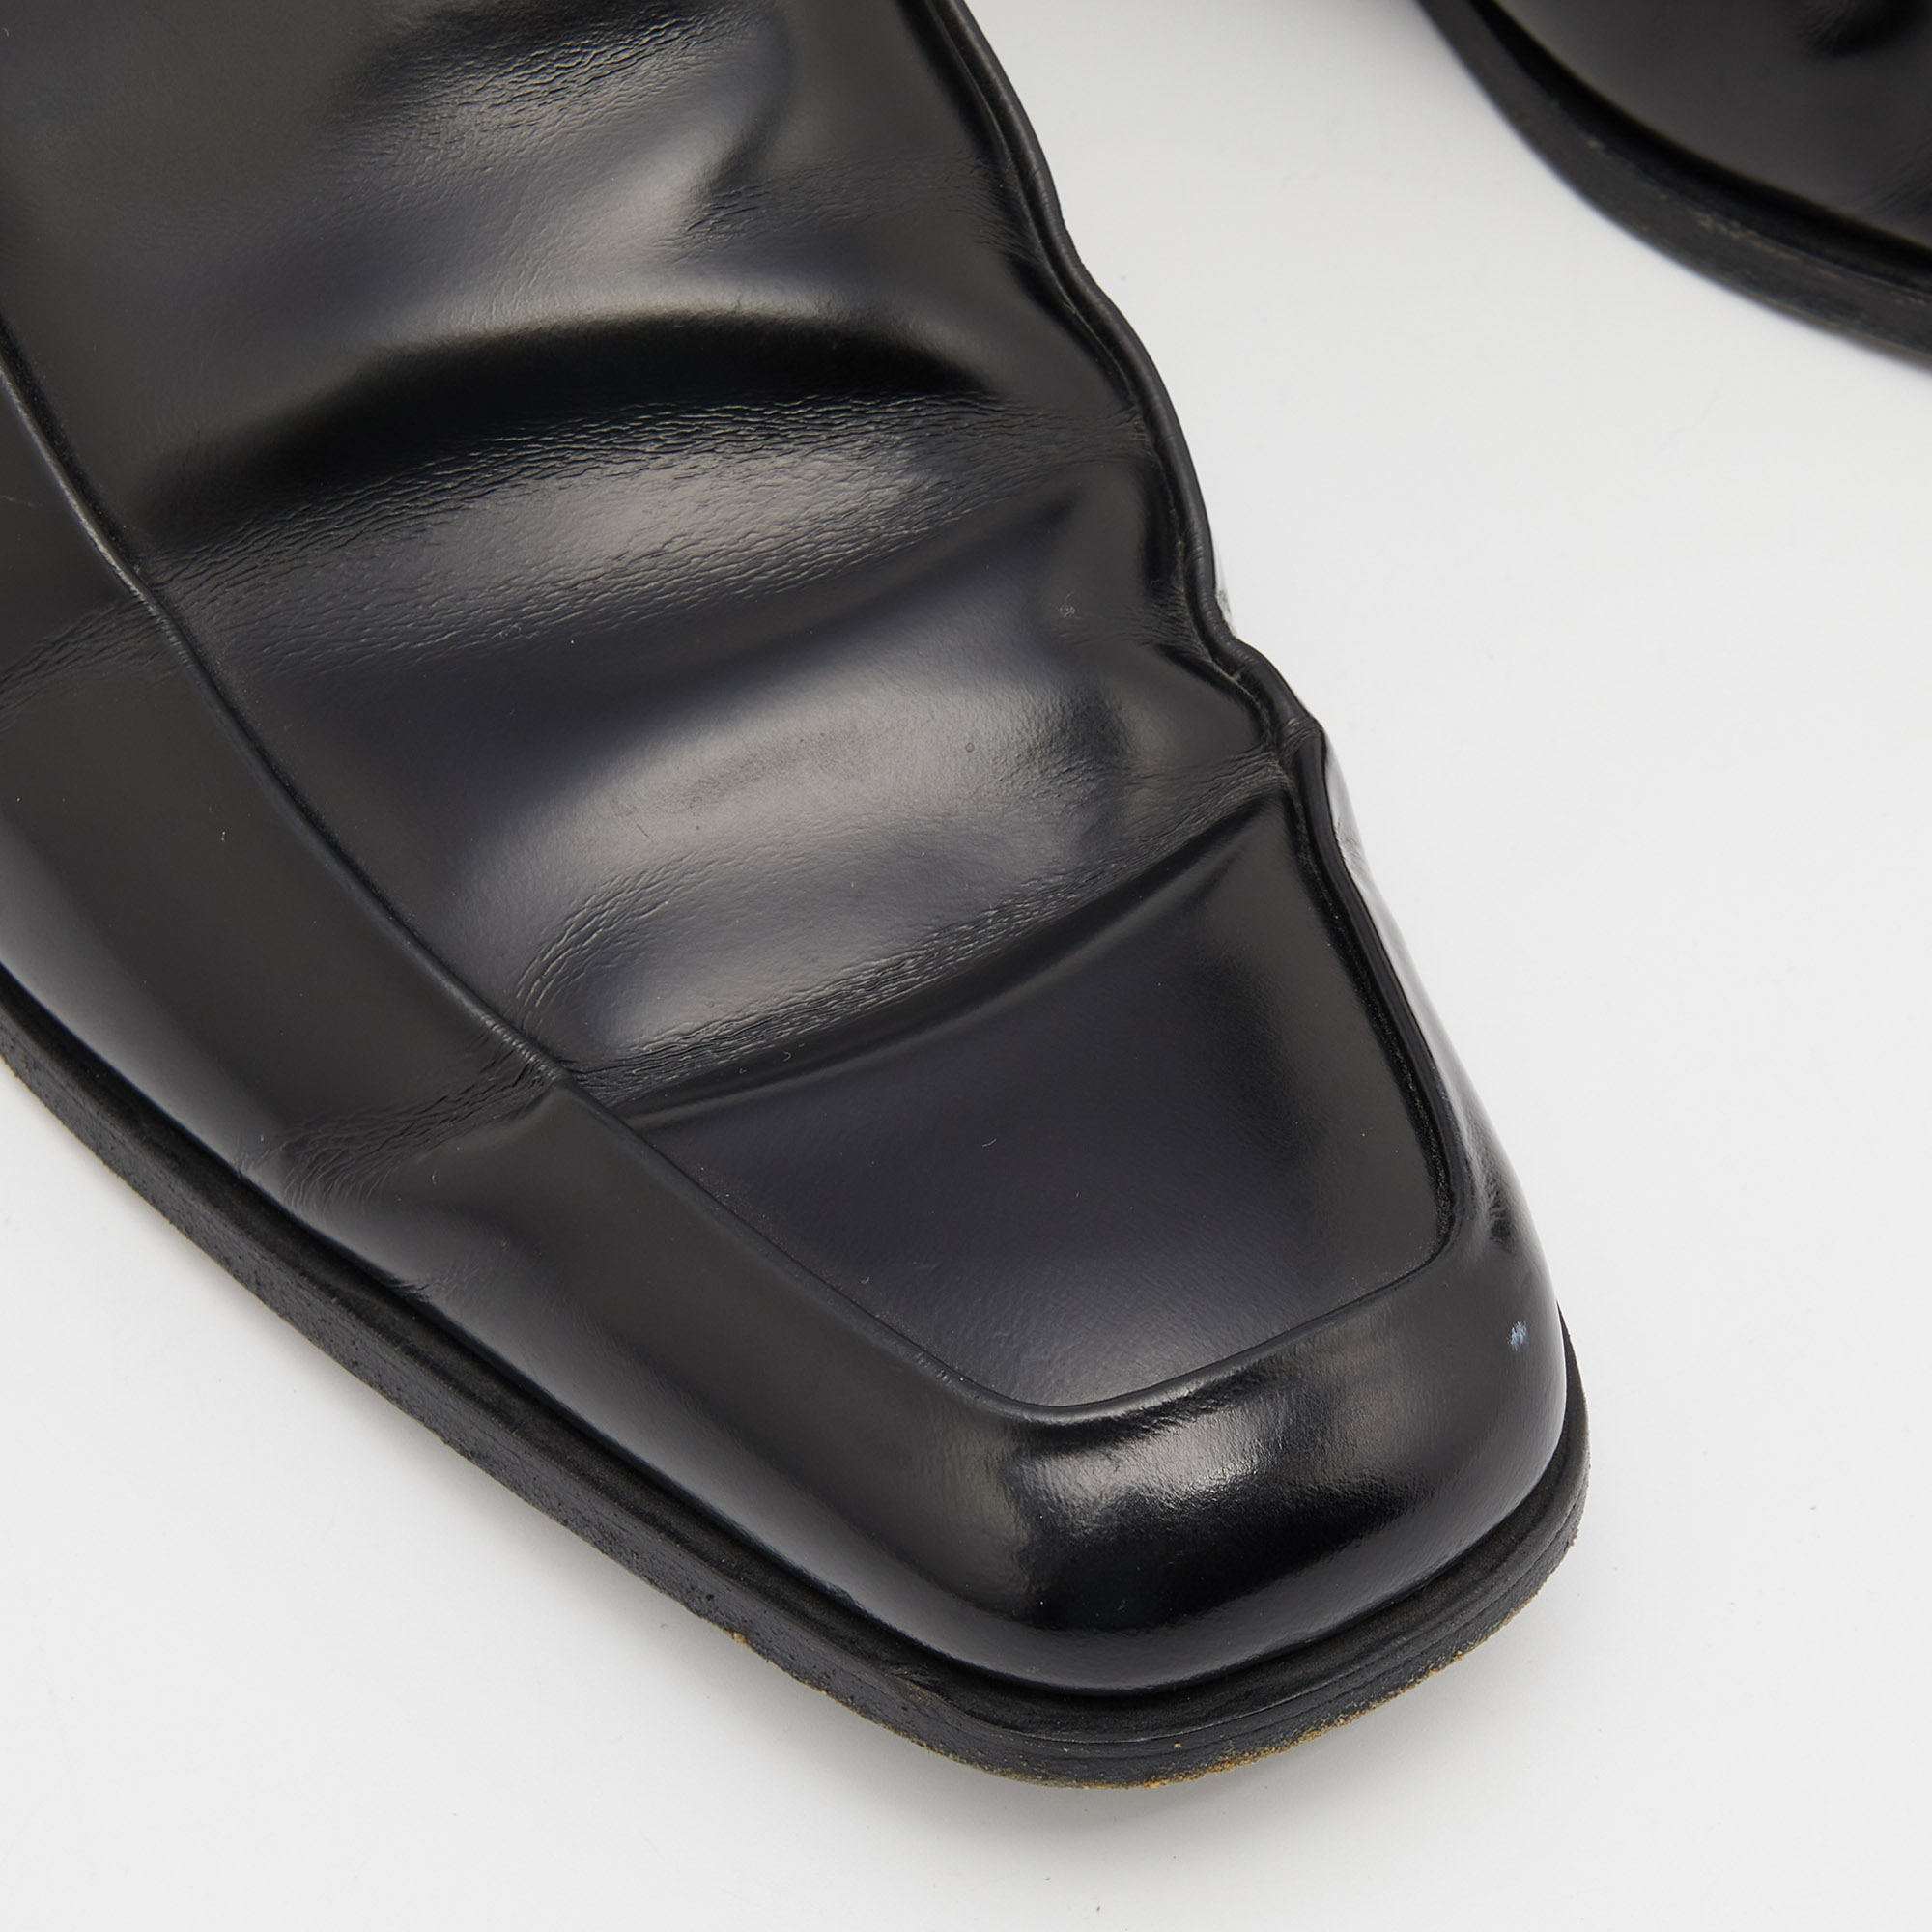 Prada Black Leather Slip On Loafers Size 40